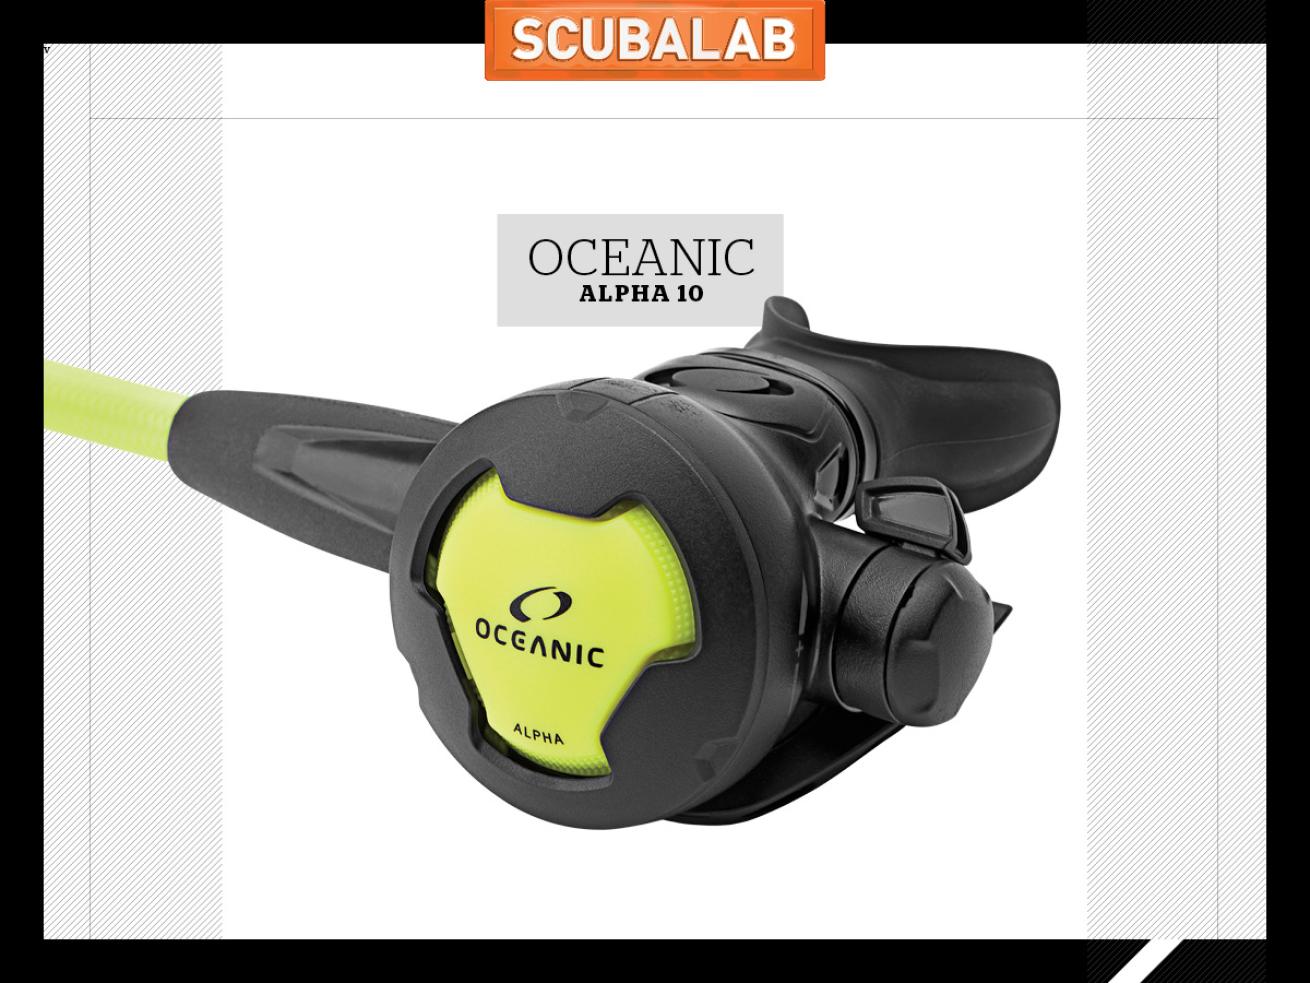 Oceanic Alpha 10 octo scuba diving alternate second stage regulator